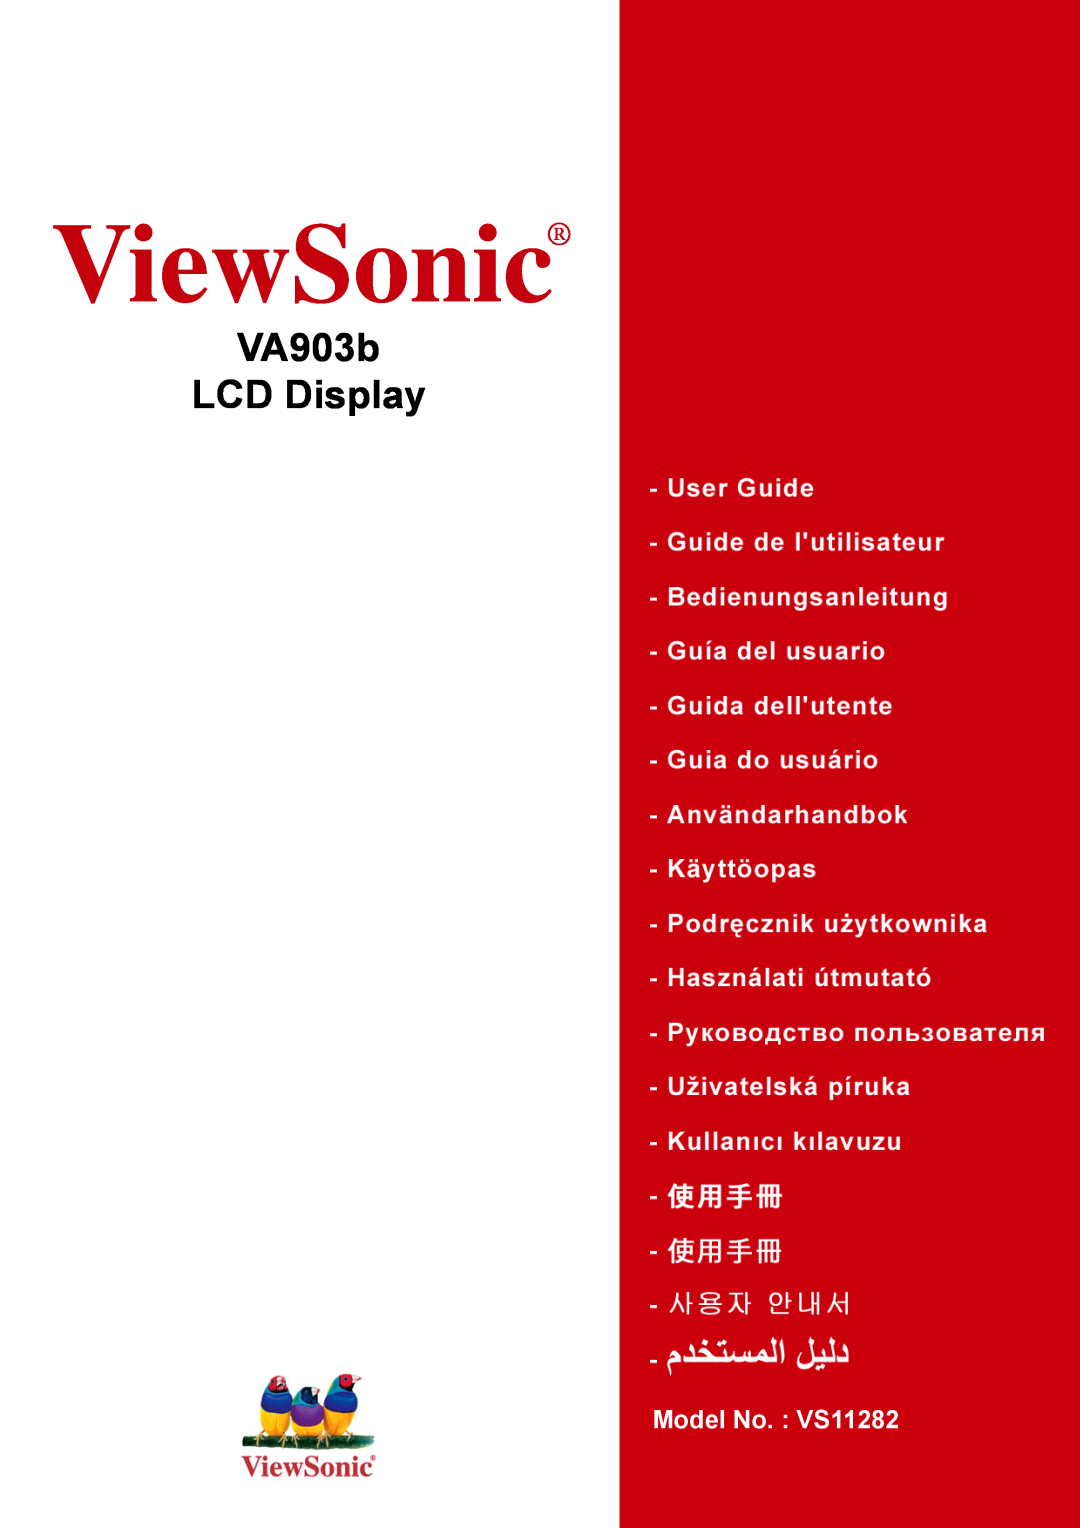 ViewSonic VA903B manual ViewSonic, VA903b LCD Display, Model No. VS11282 